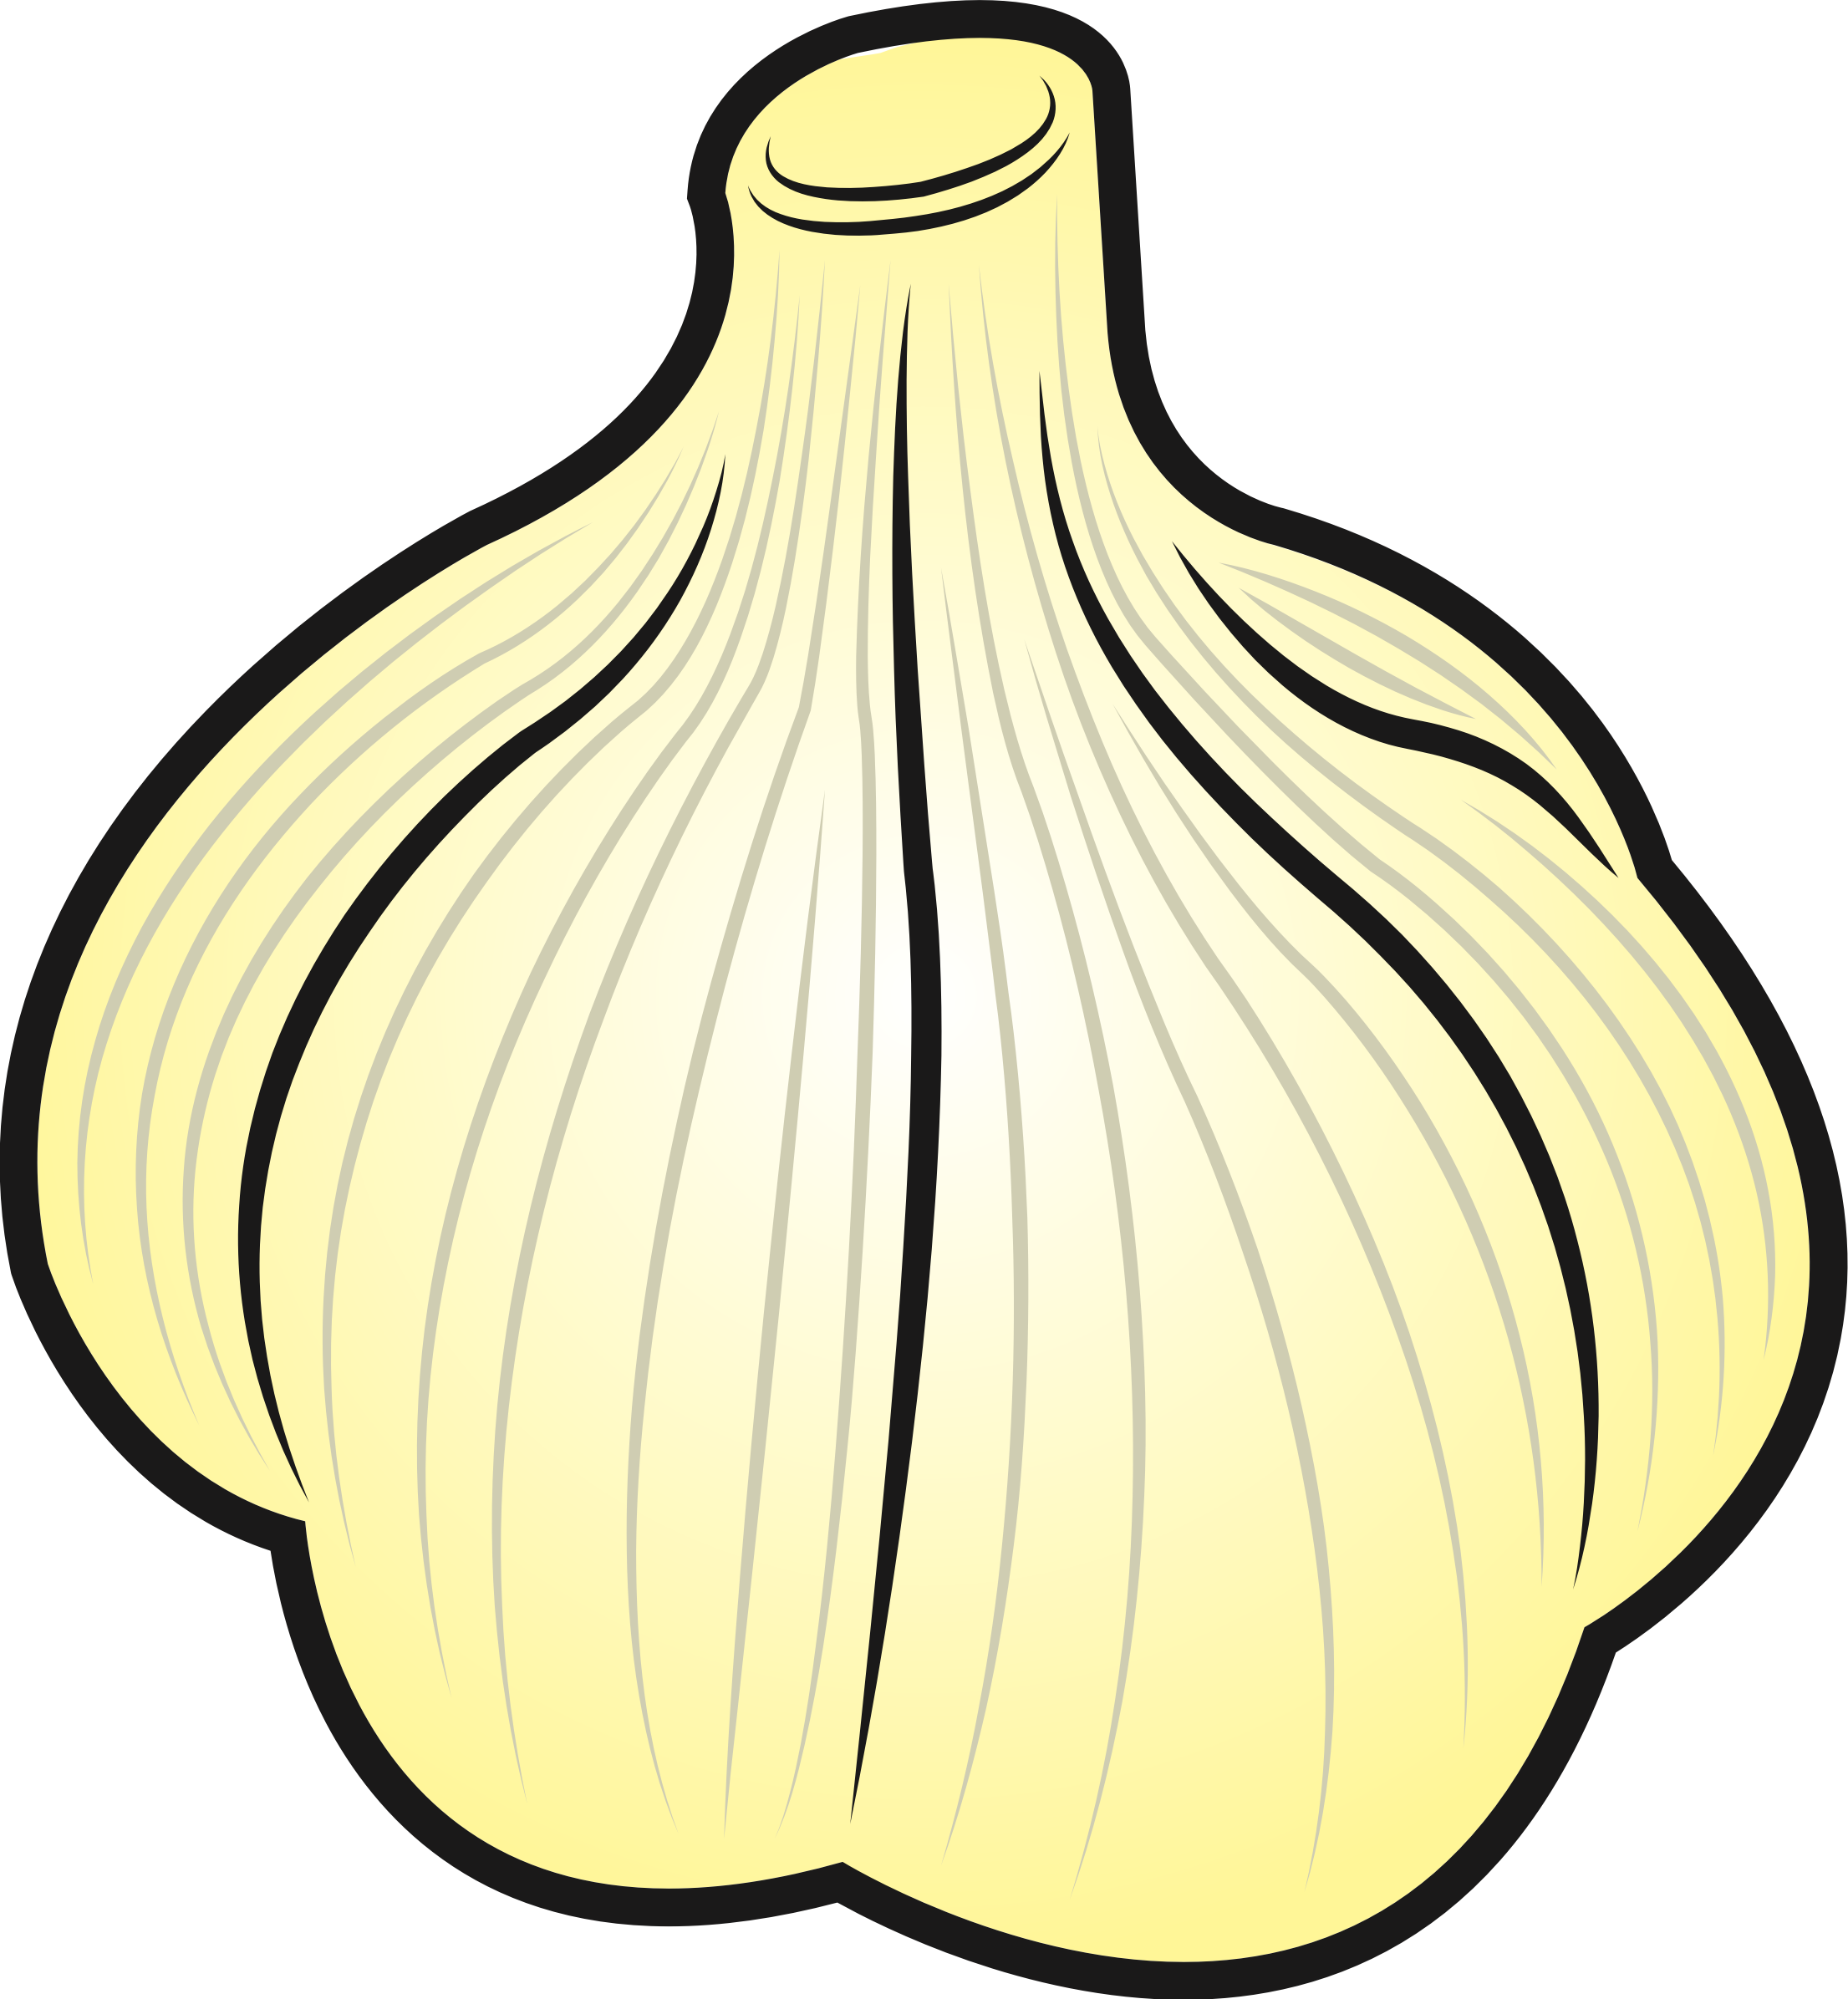 Big image png. Onion clipart garlic onion